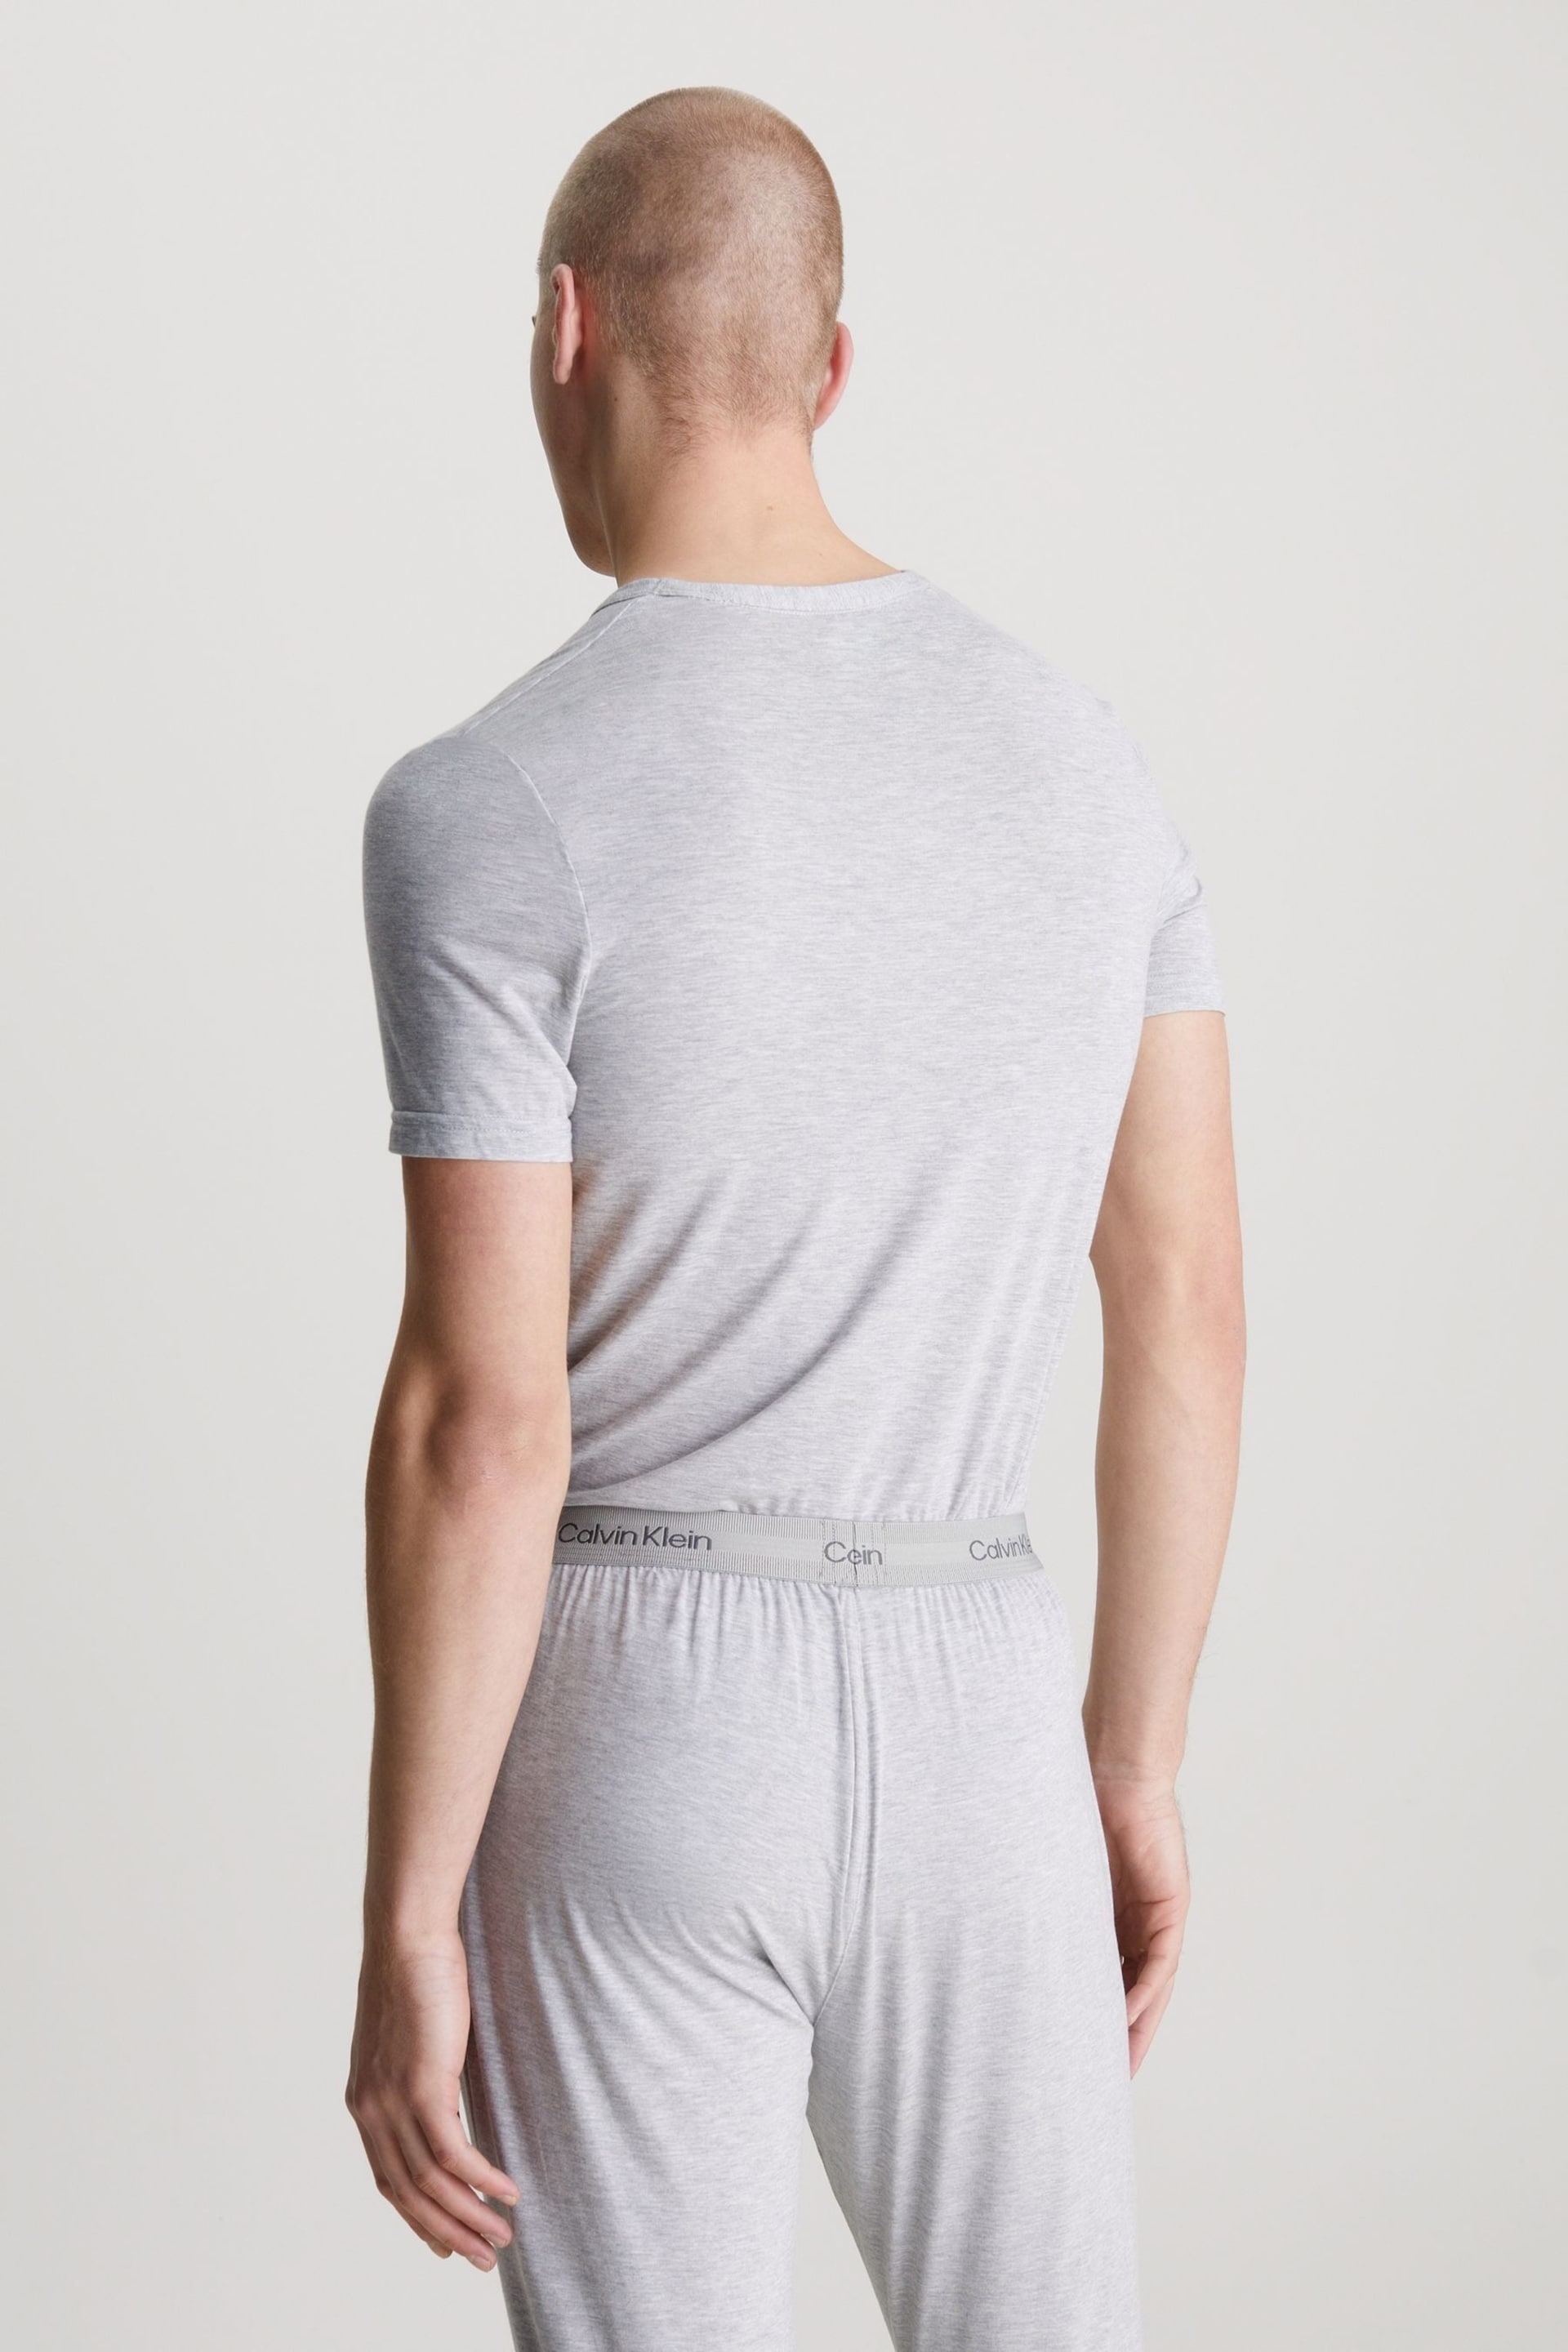 Calvin Klein Grey Plain Crew Neck T-Shirt - Image 2 of 4